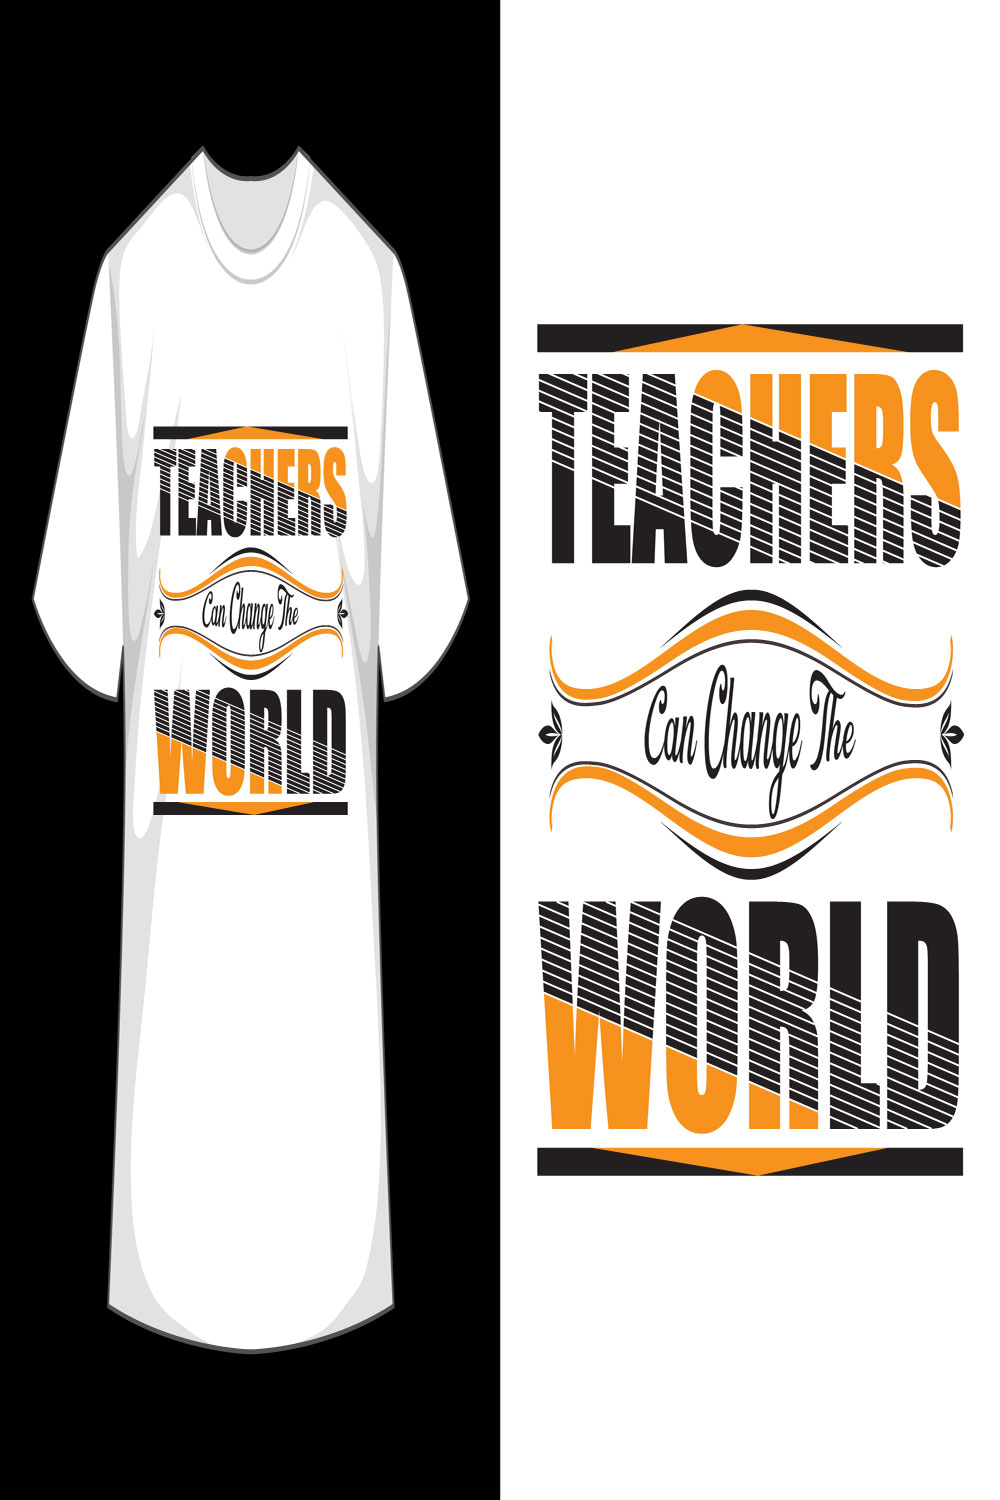 Teachers day T shirt pinterest preview image.